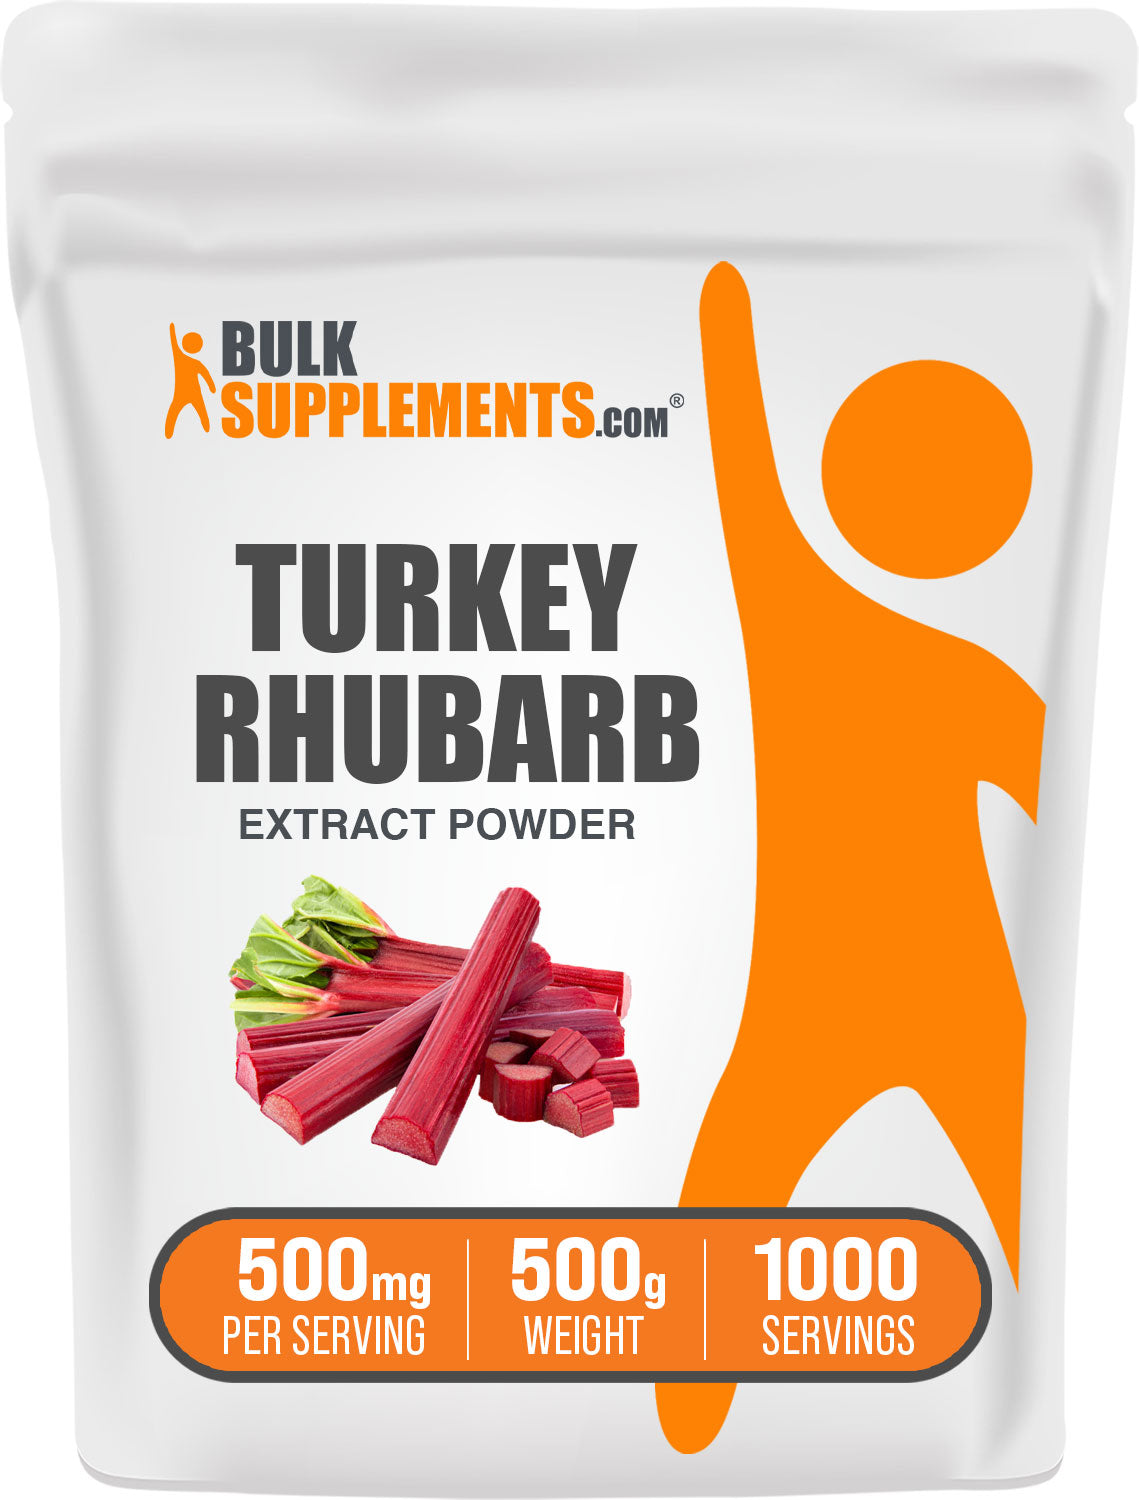 BulkSupplements.com Turkey Rhubarb Extract Powder 500g Bag